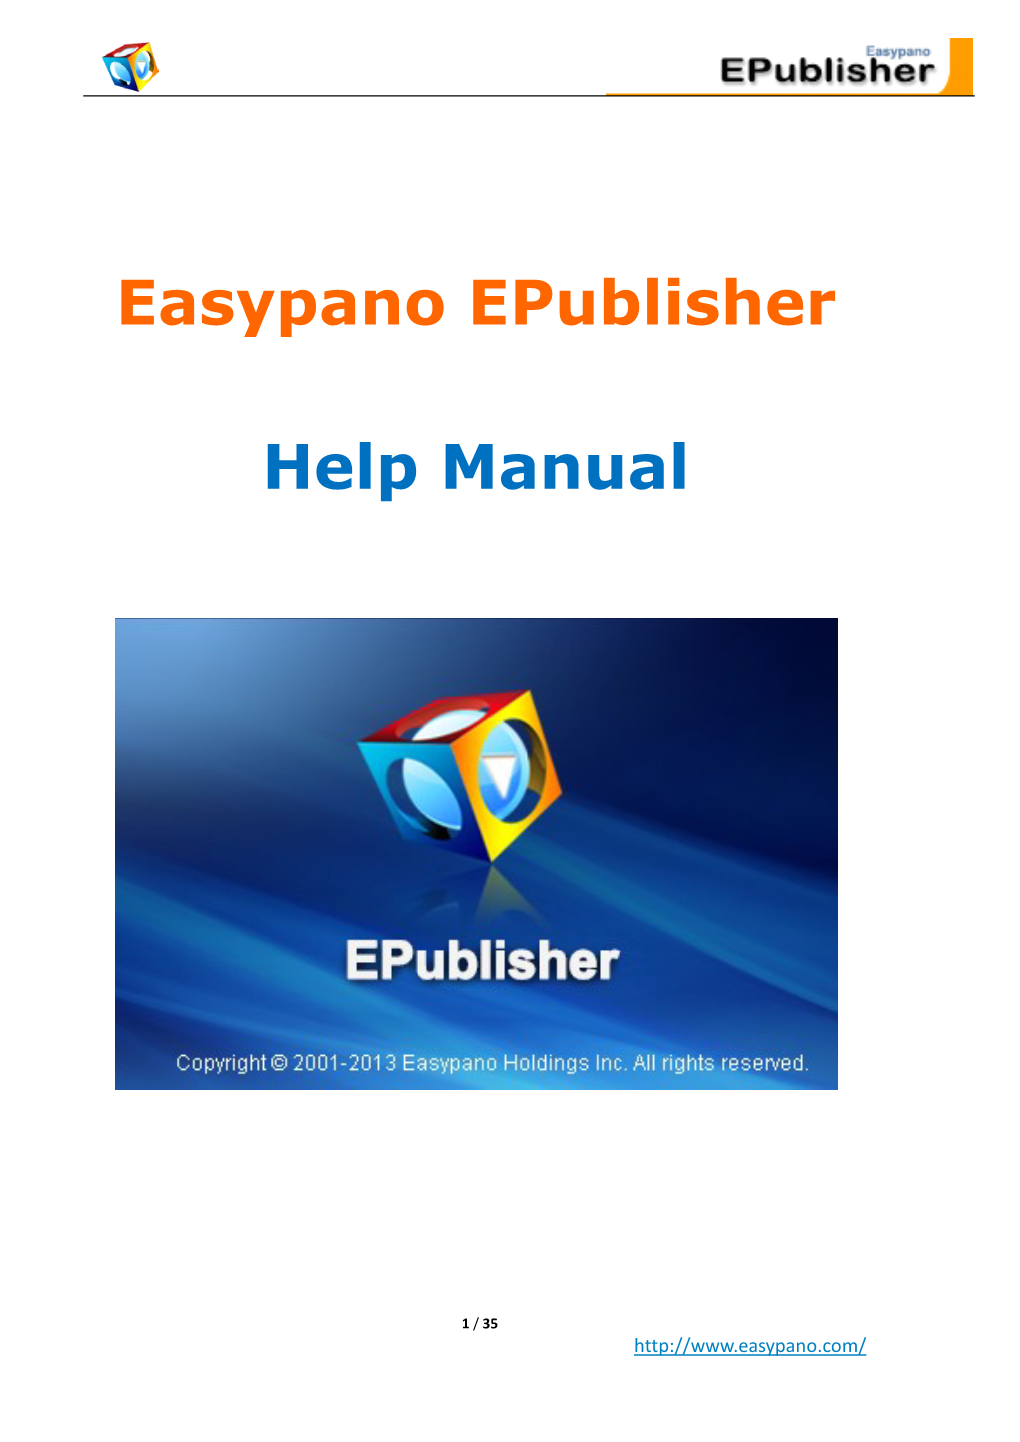 Easypano Epublisher Help Manual